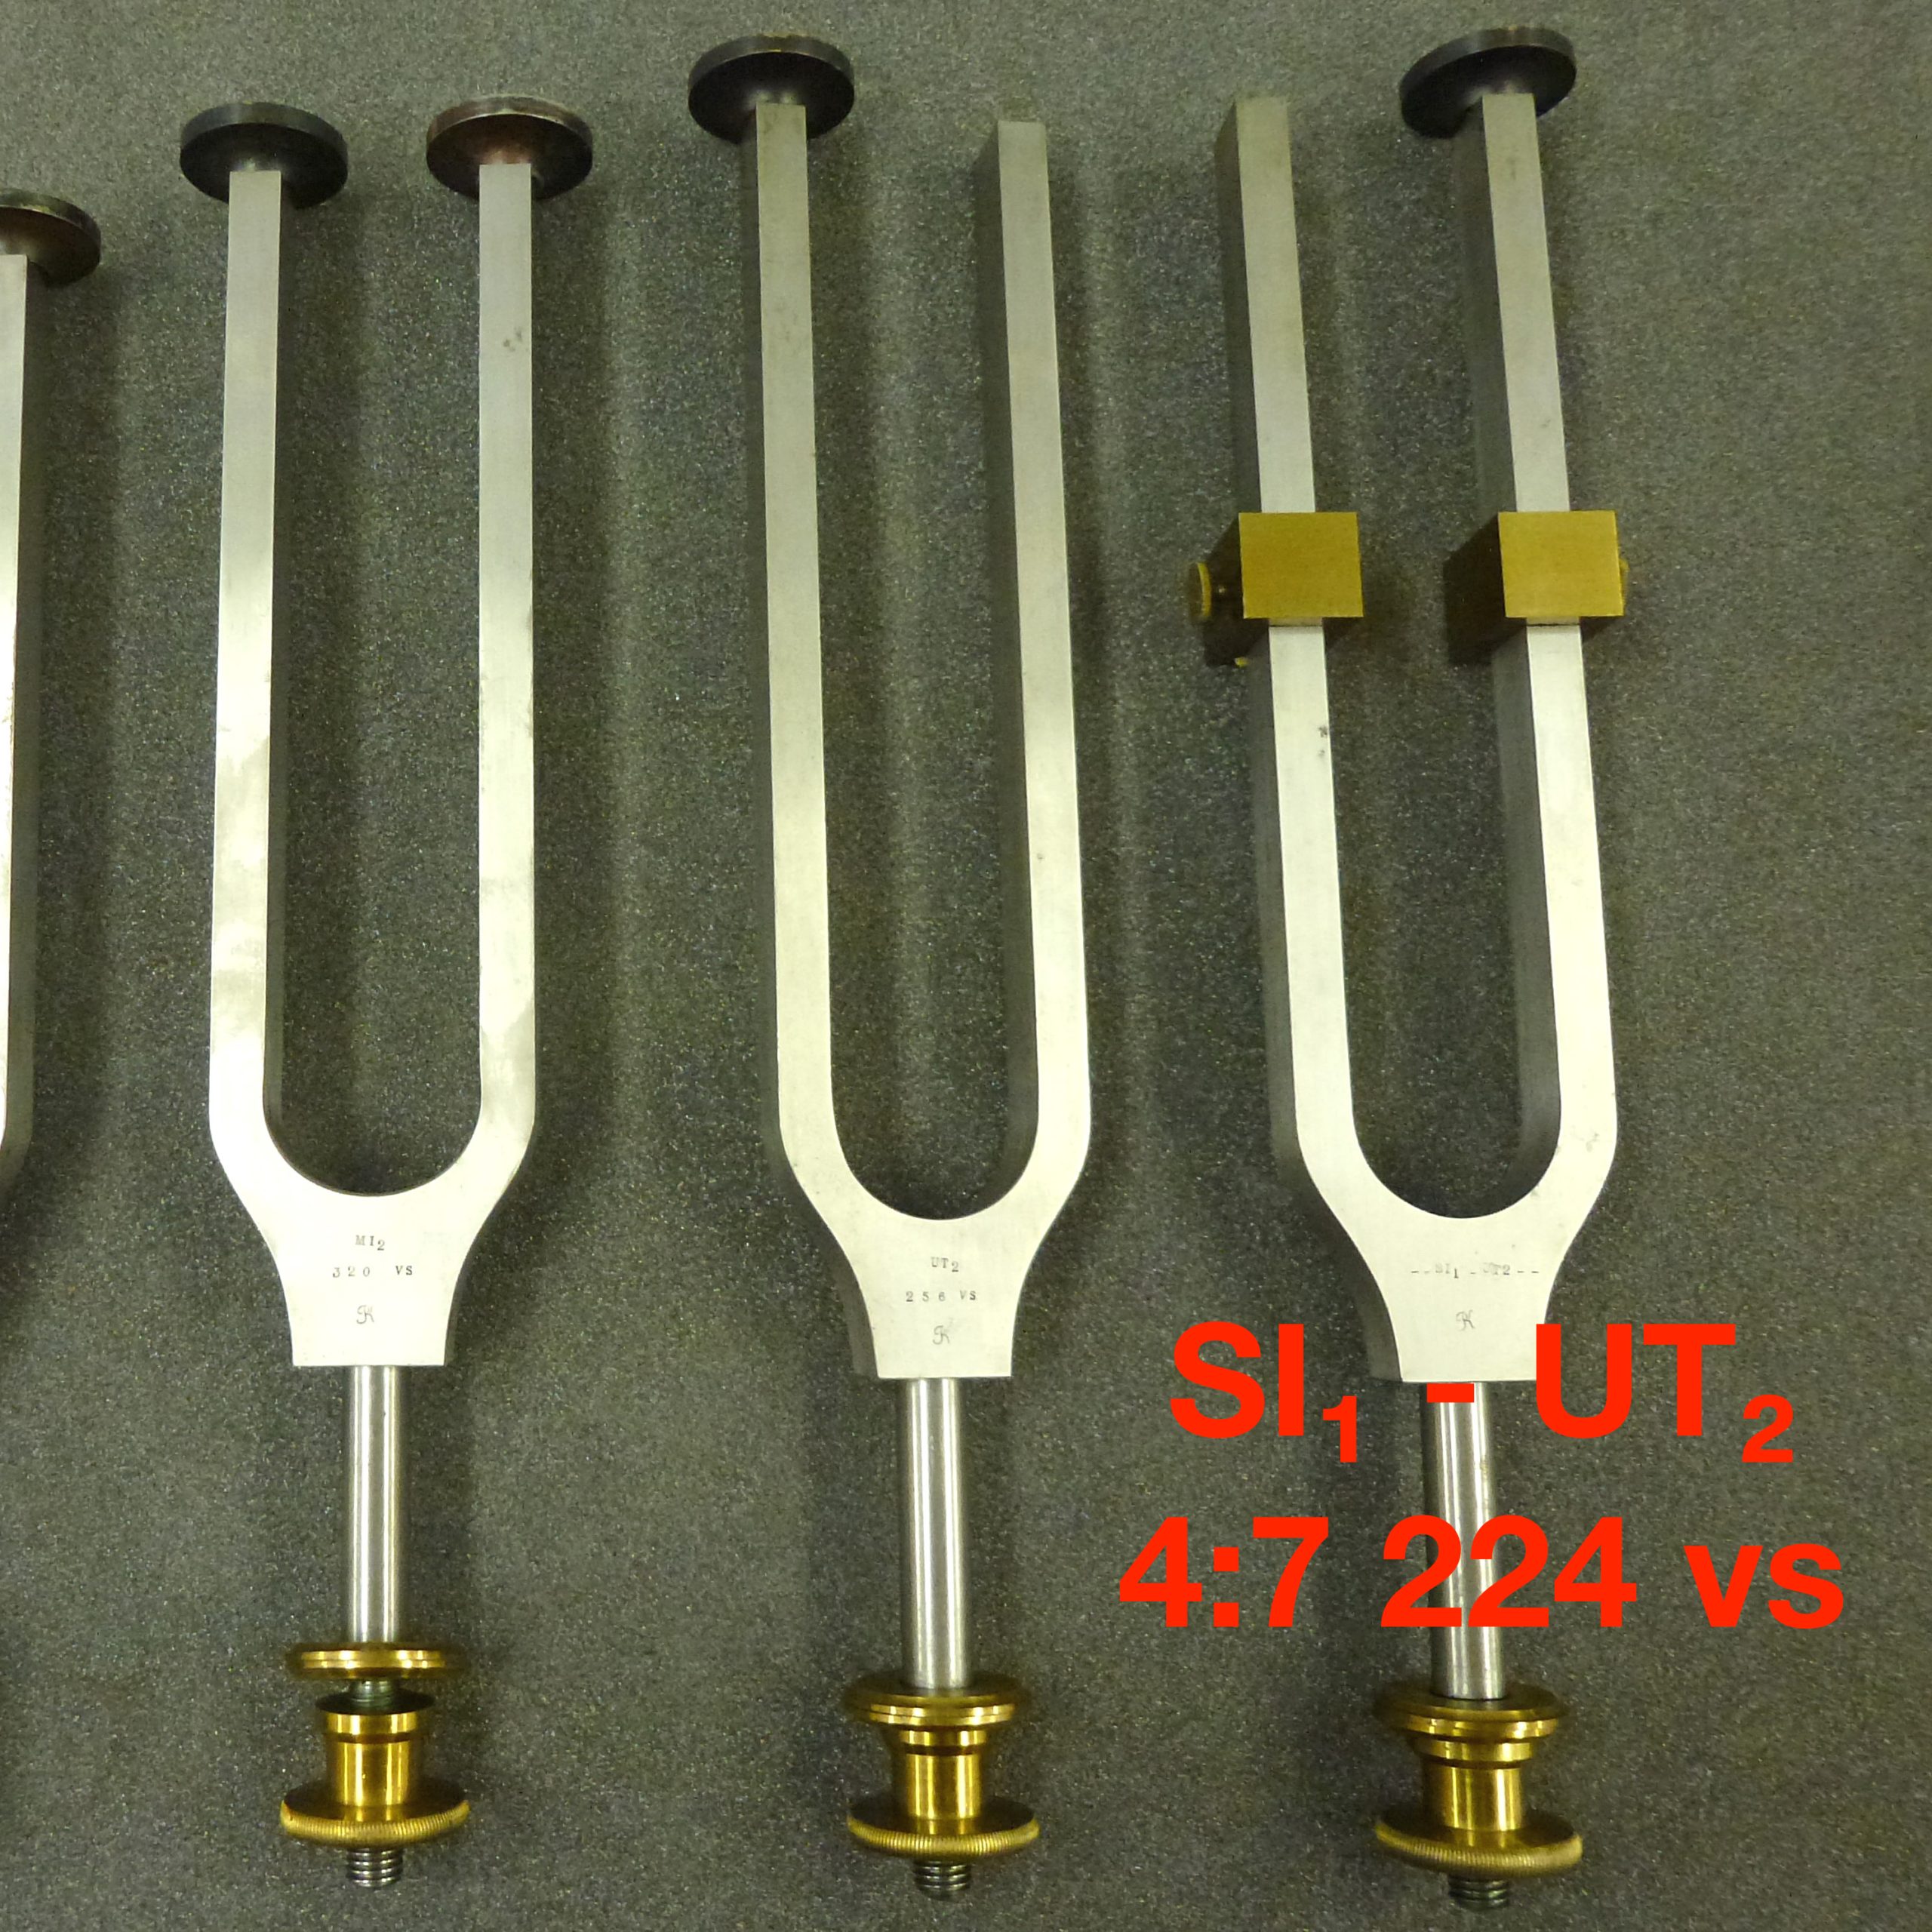 Tuning fork by Dr. R. König: SI₁ - UT₂ 4:7